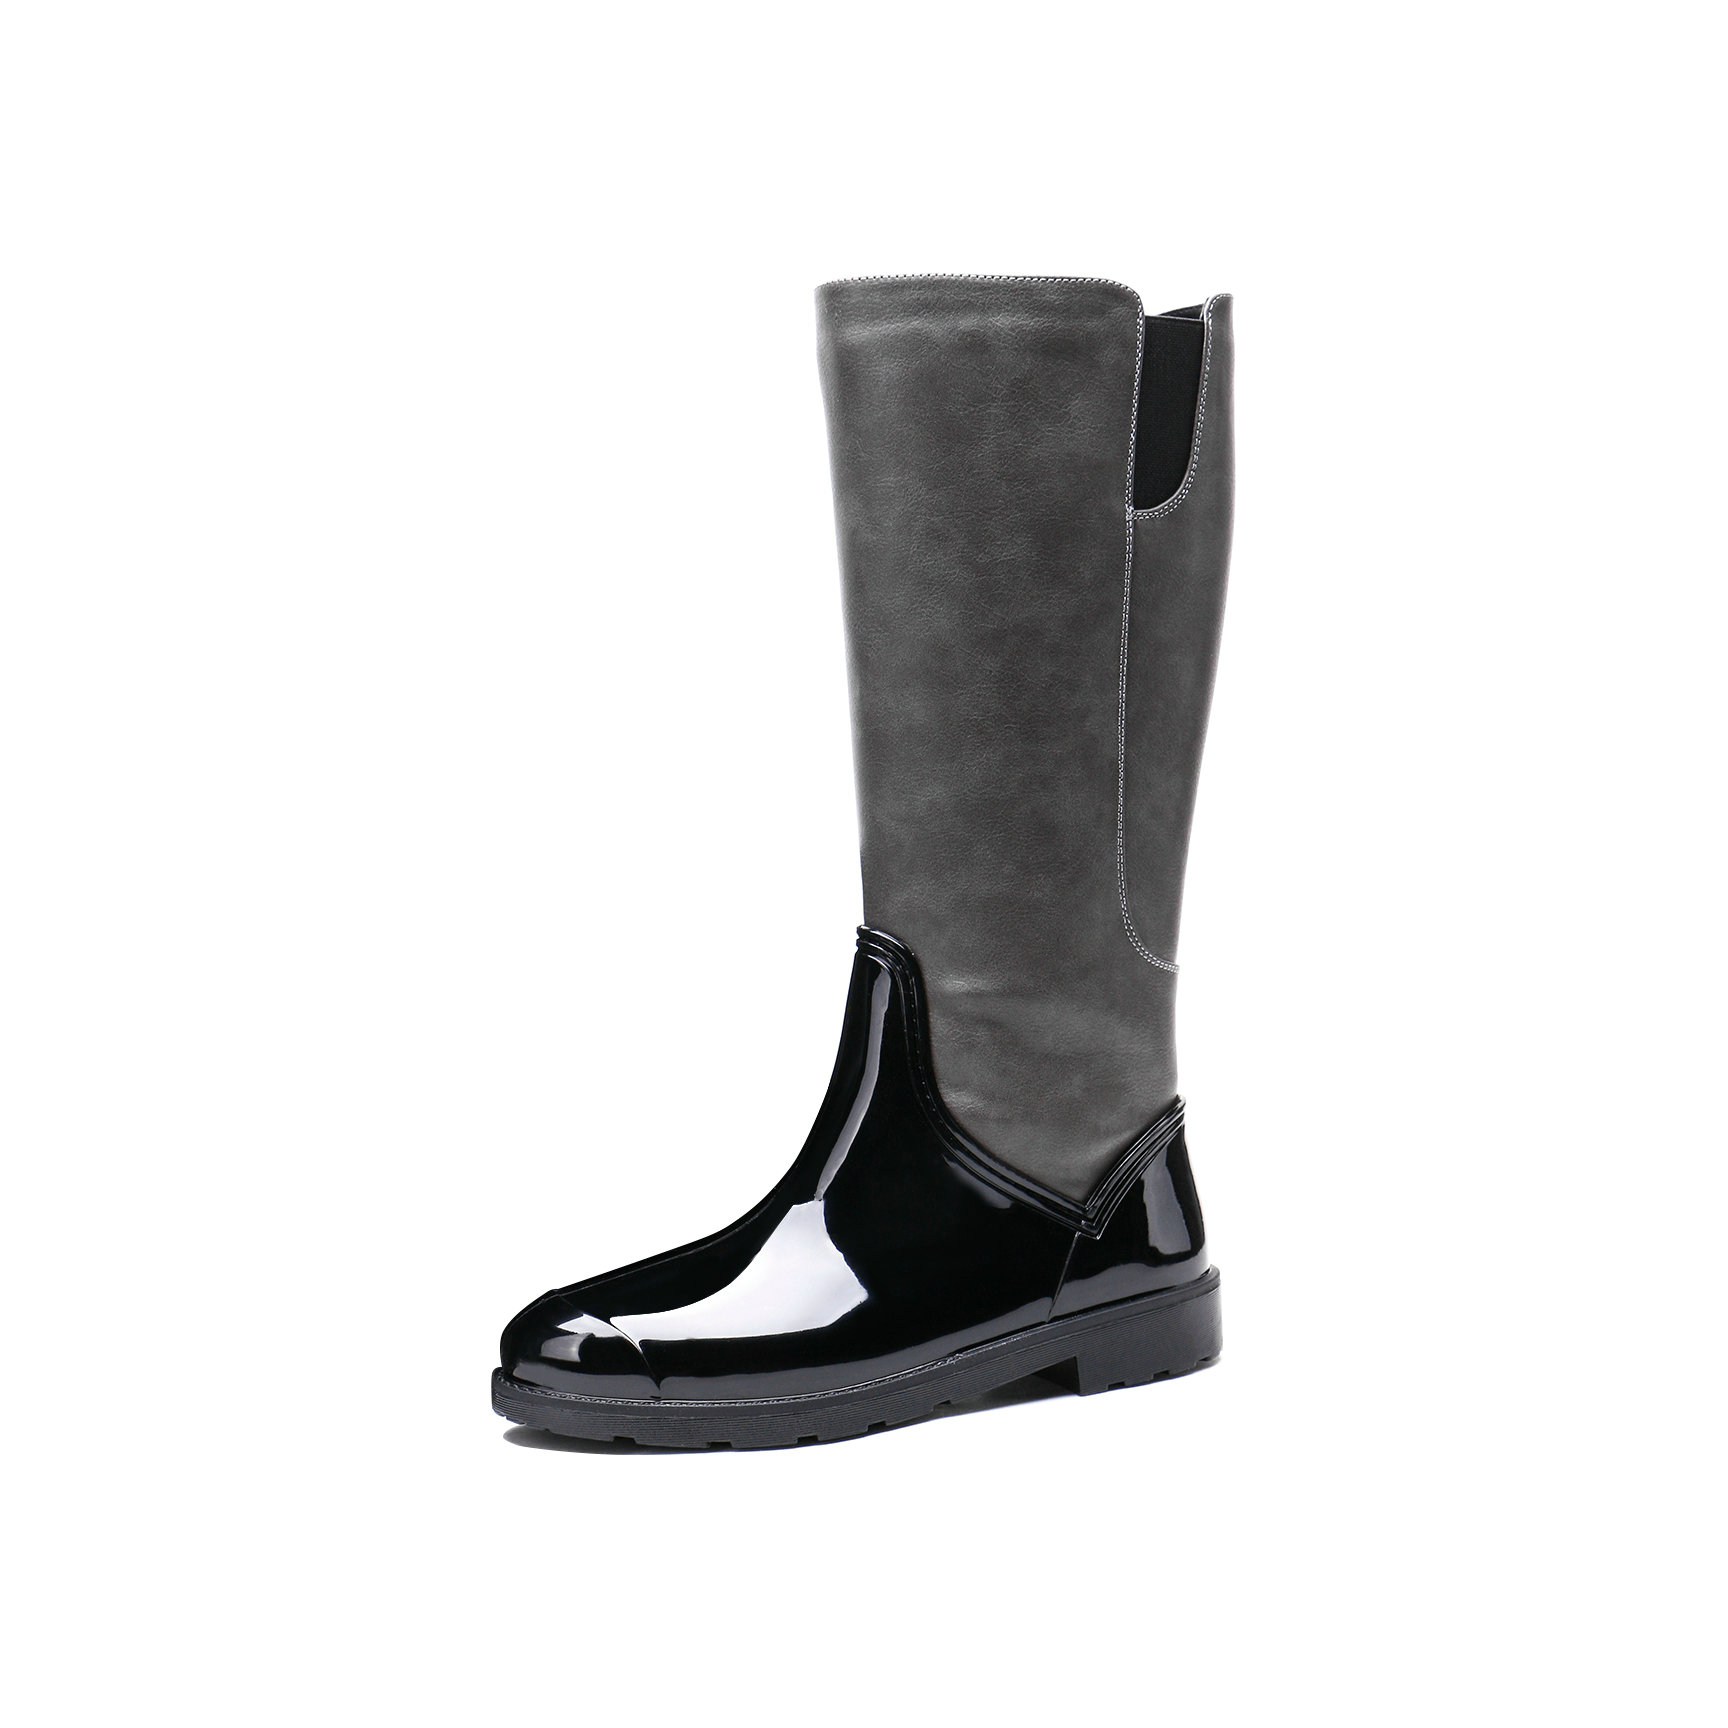 Fashion rain boots environmental PVC CW39-TP46 - Sunshineo shoe factory